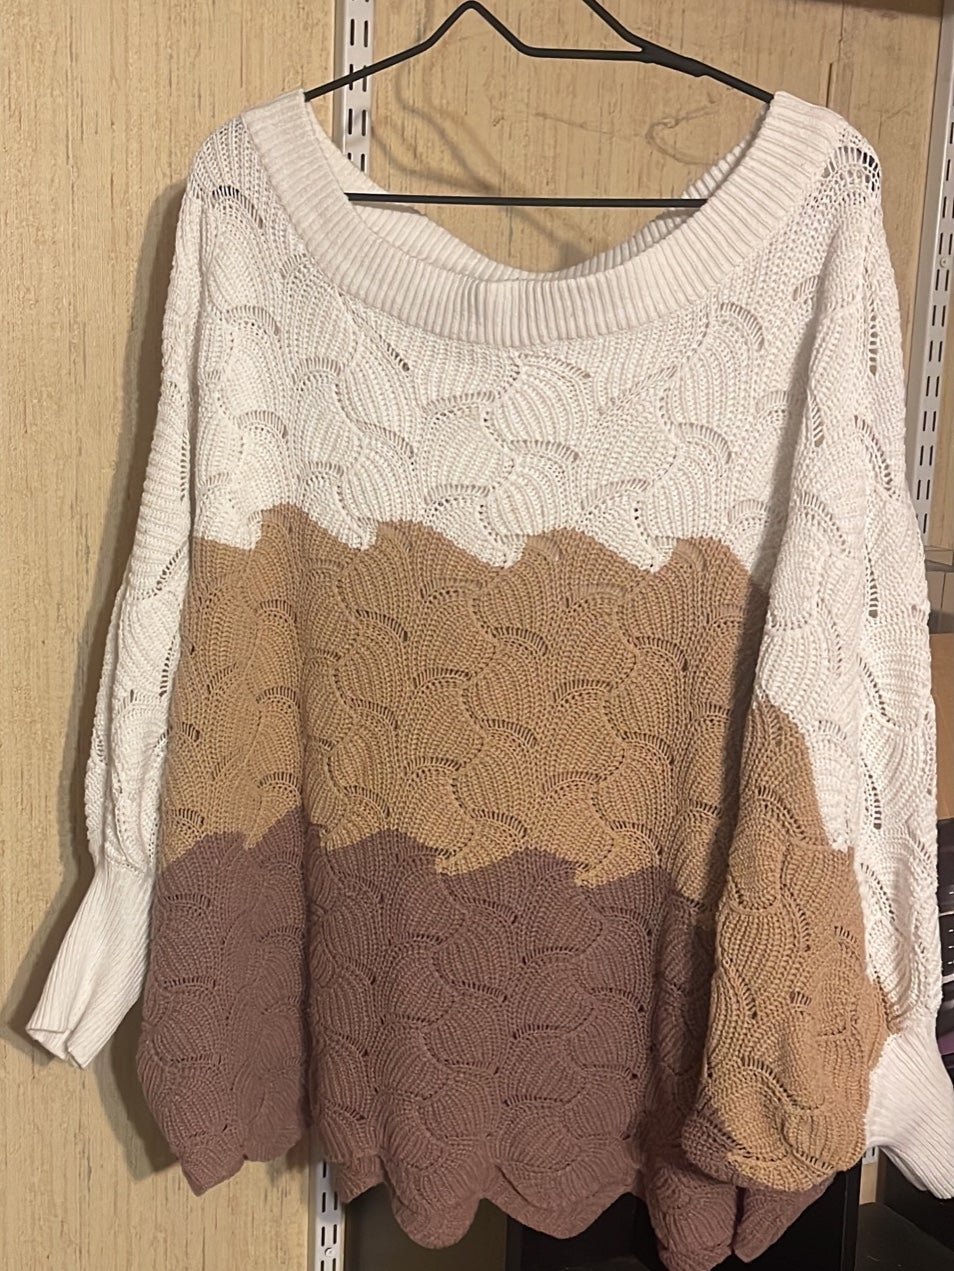 floor price womens sweaters jjZaiQm1V Wholesale